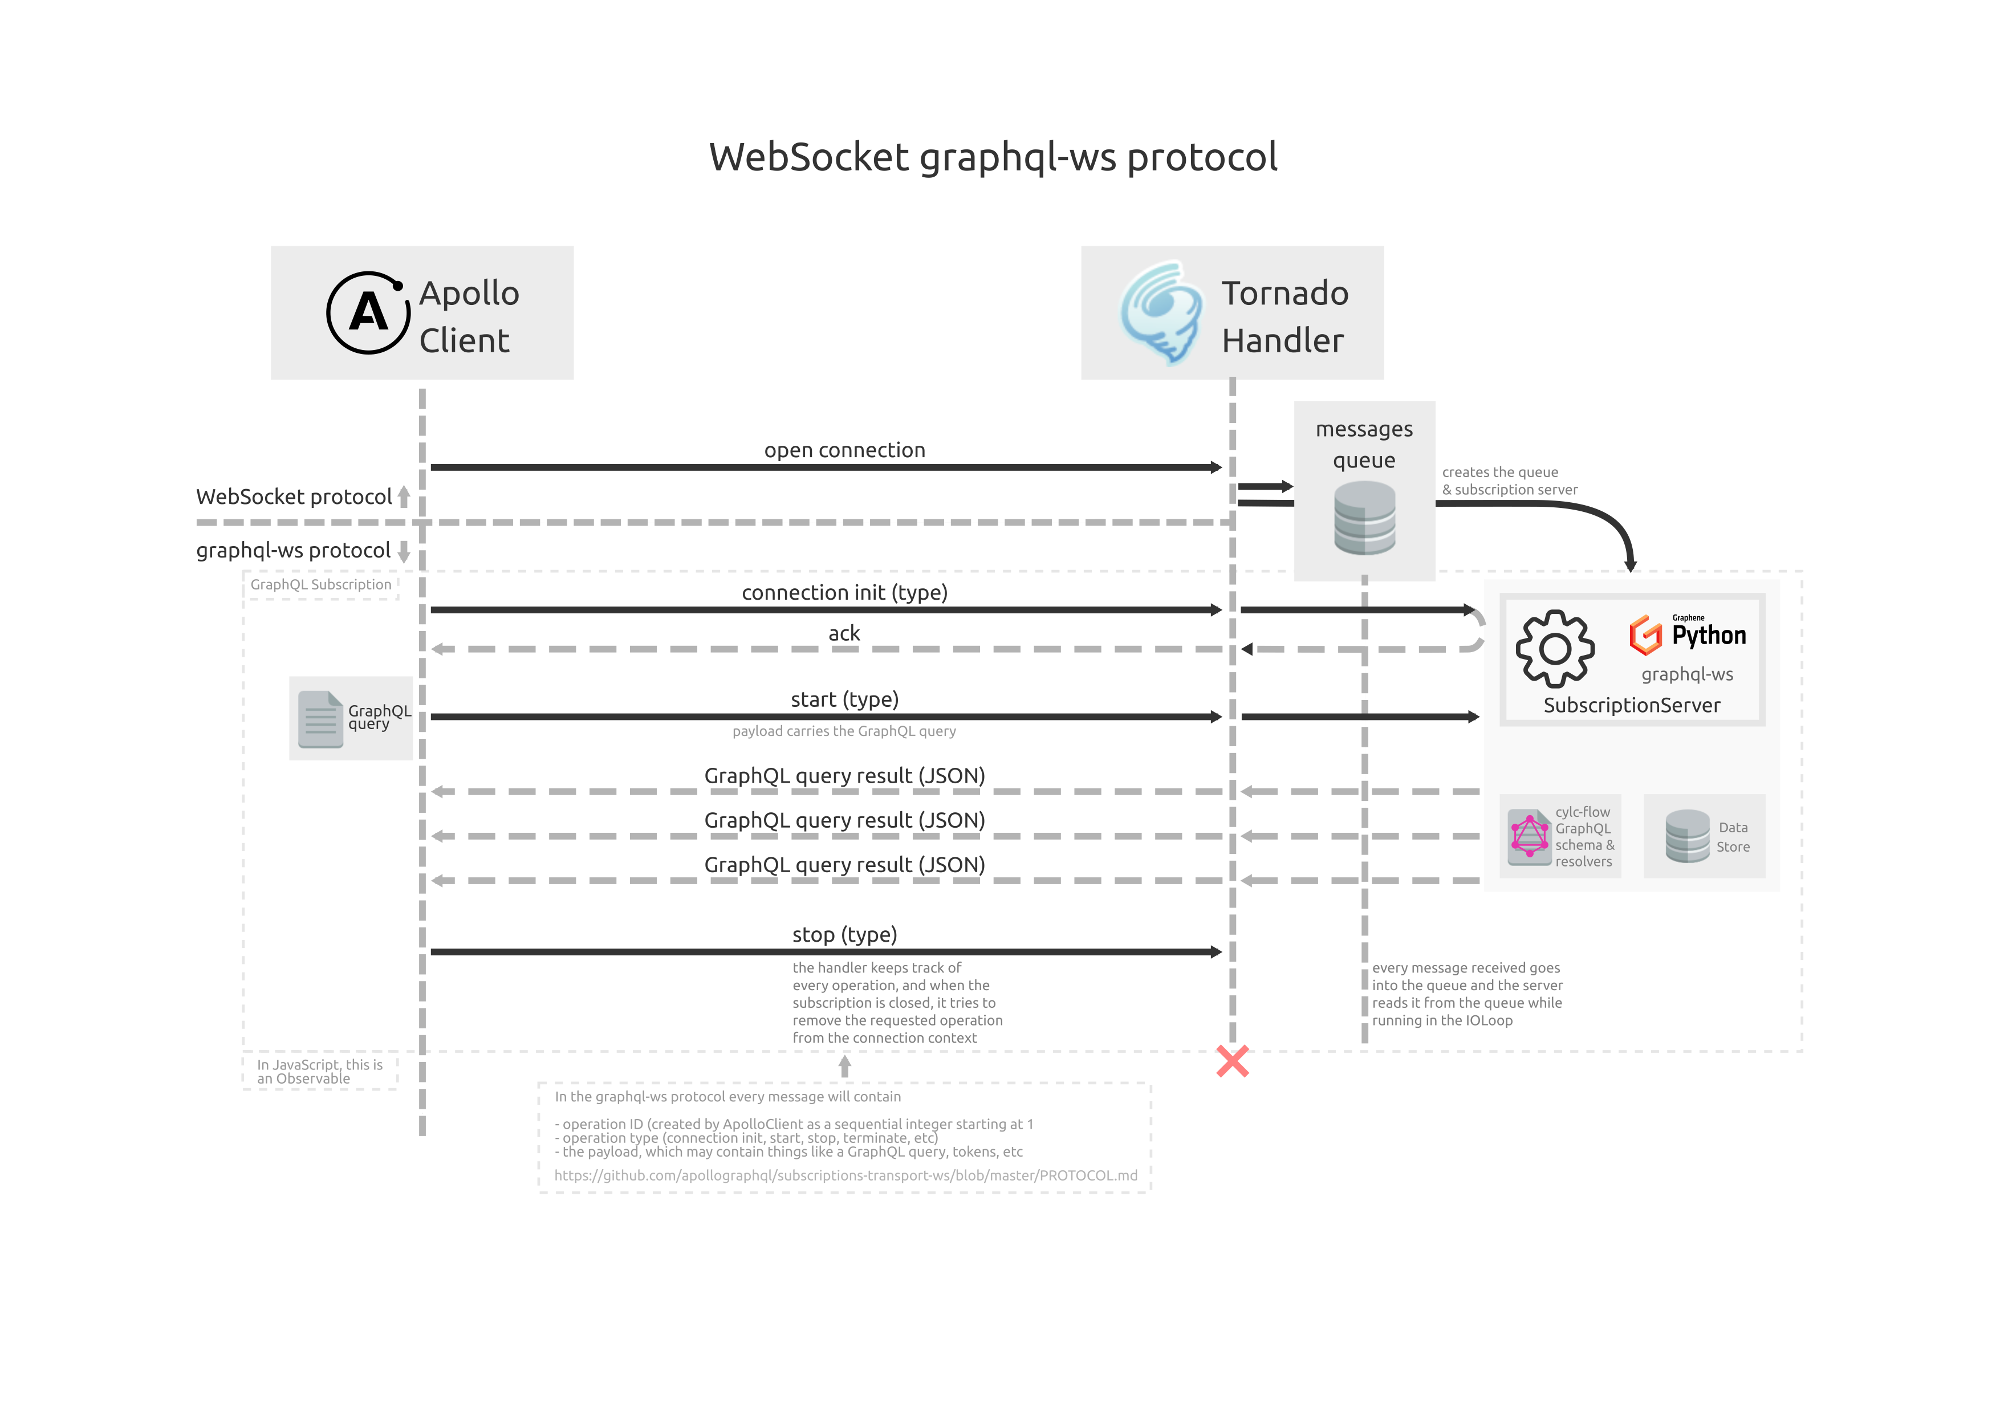 ../../_images/websocket-graphql-ws-protocol.png